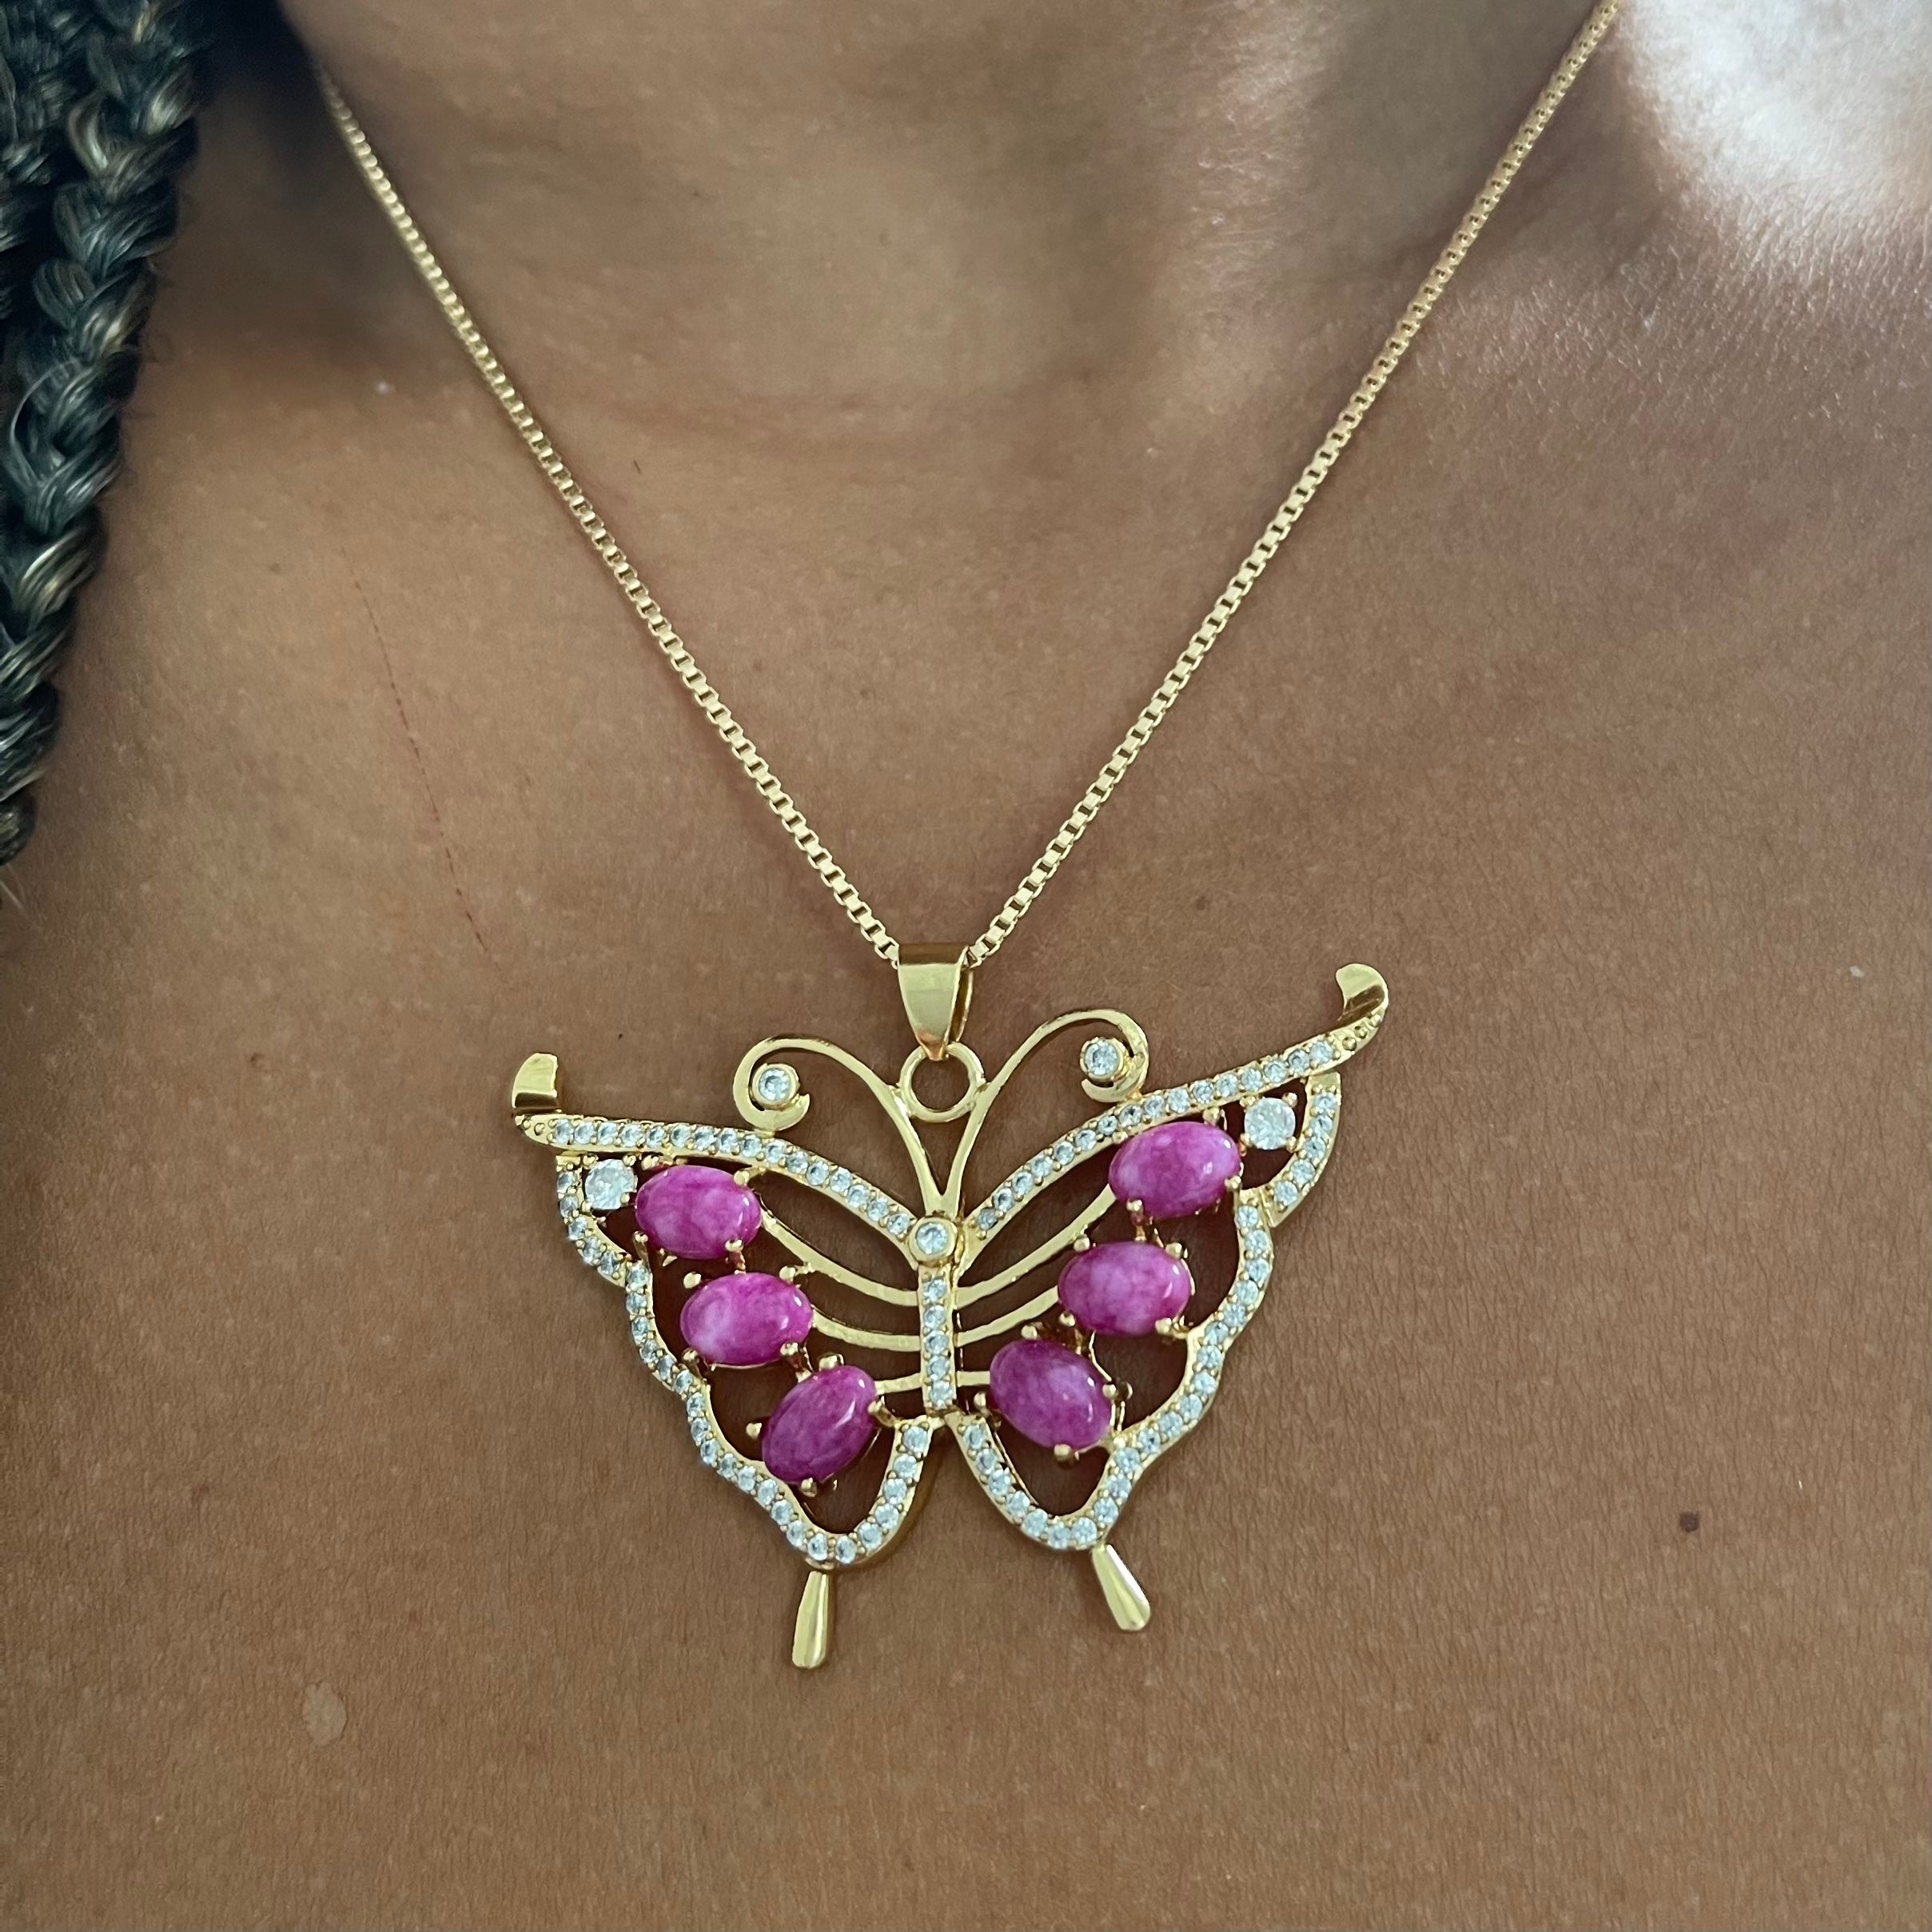 Spread Your Wings Fuchsia Pendant Necklace